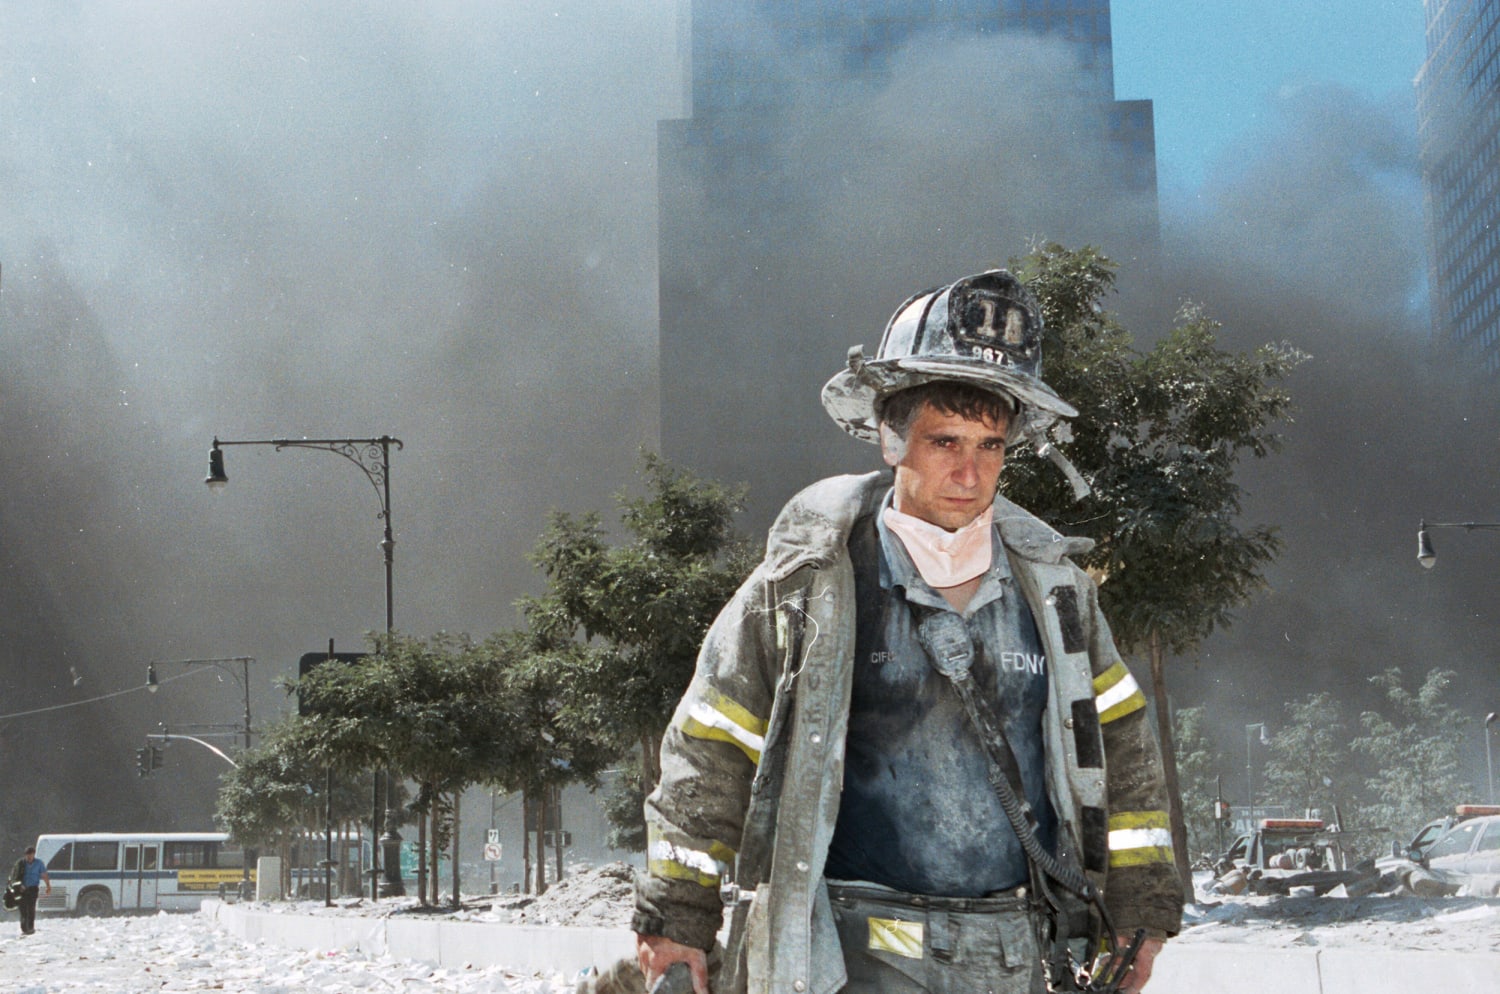 9 11 twin towers plane crash